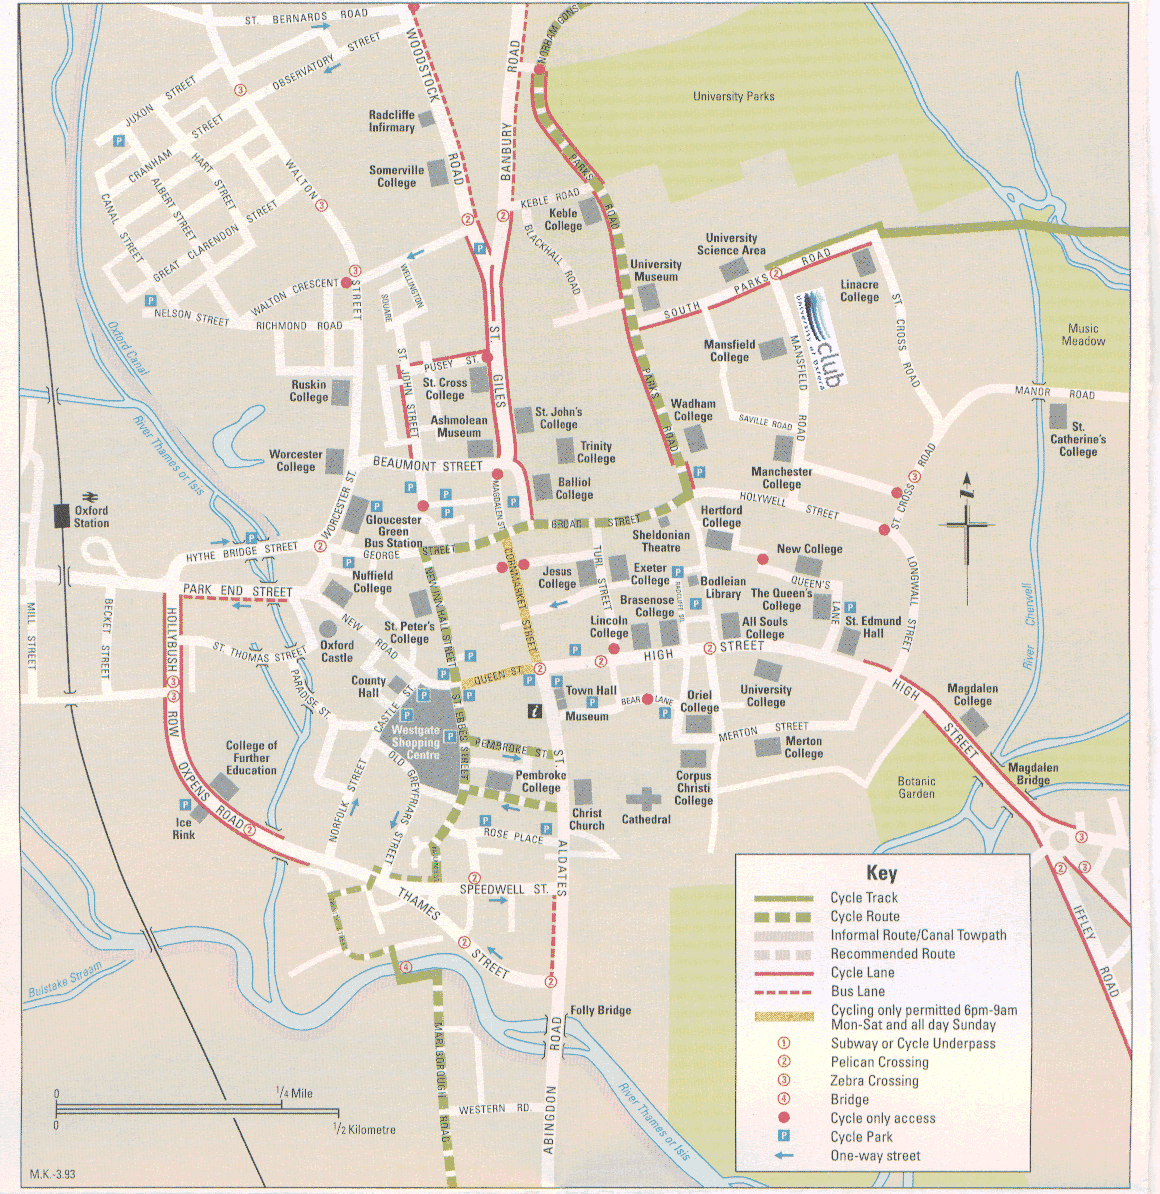 Oxford mapa